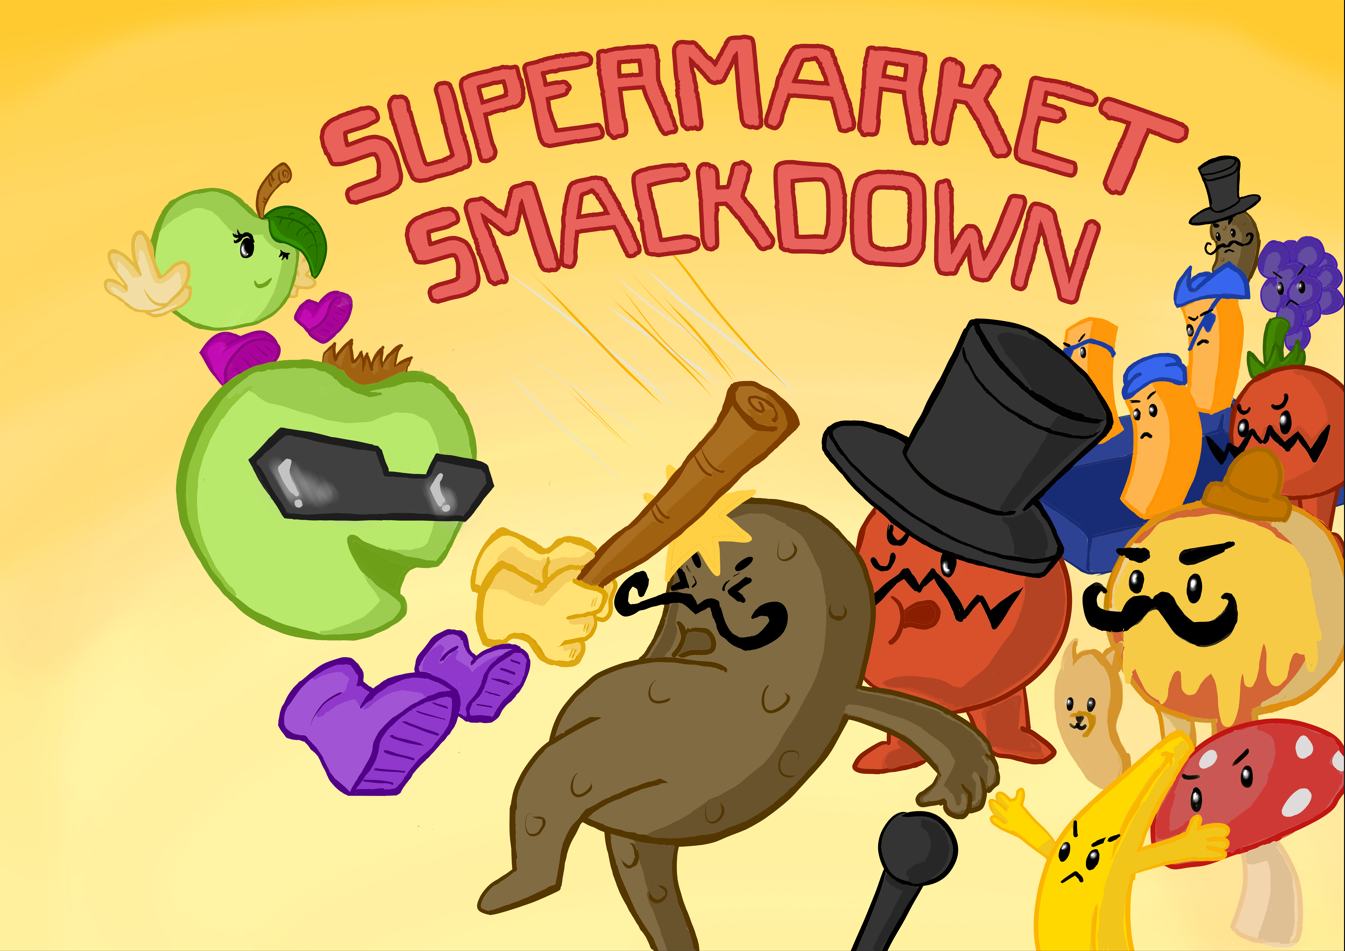 Supermarket Smackdown